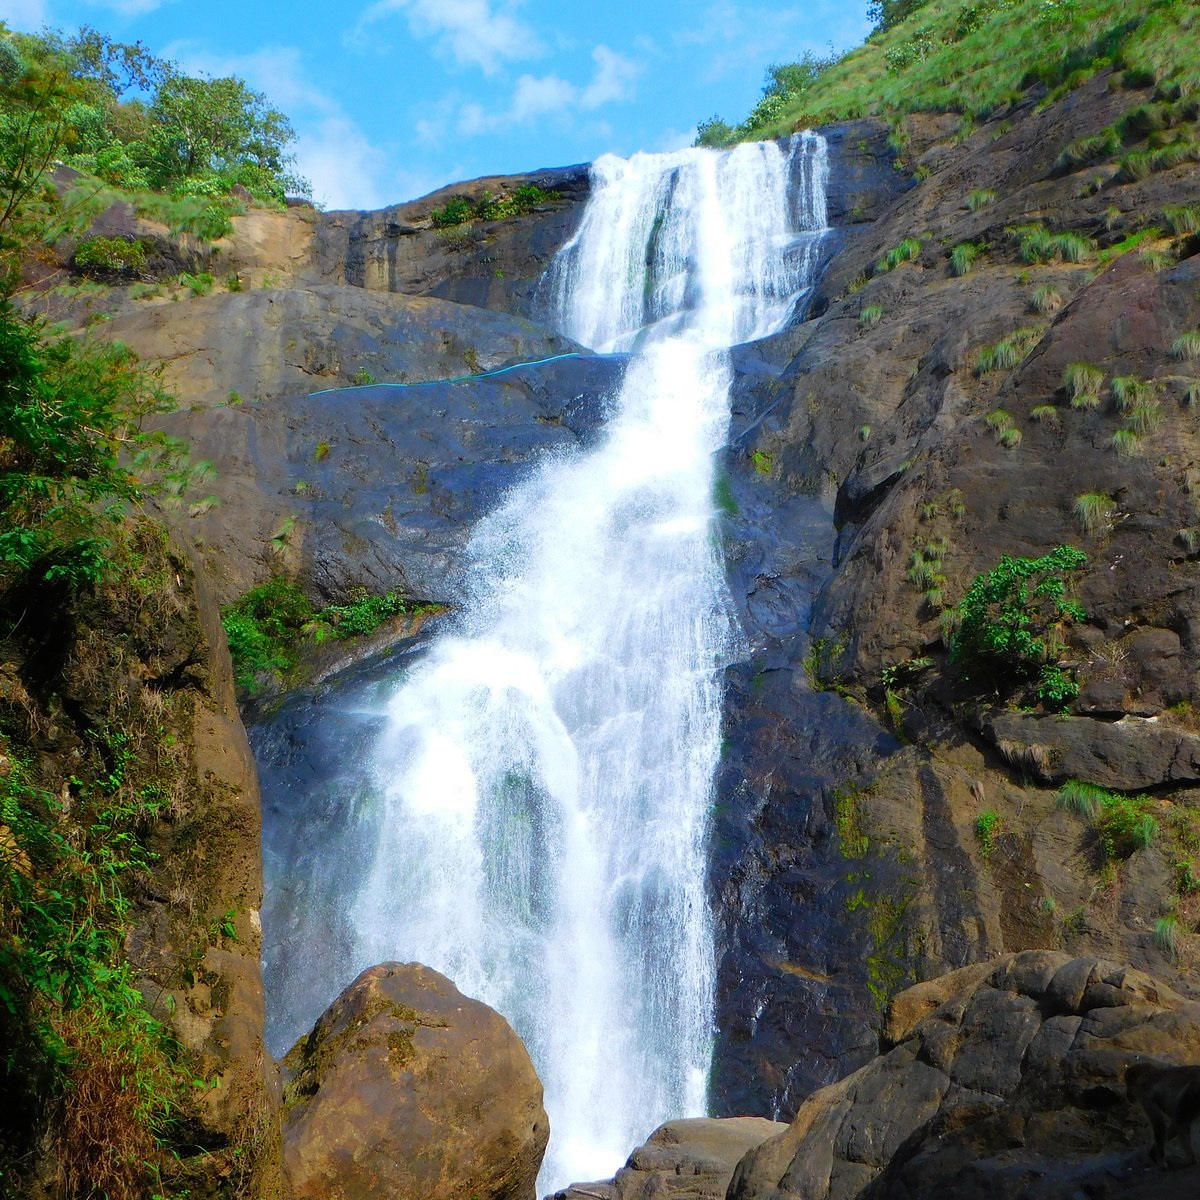 Palaruvi Waterfalls, Kollam